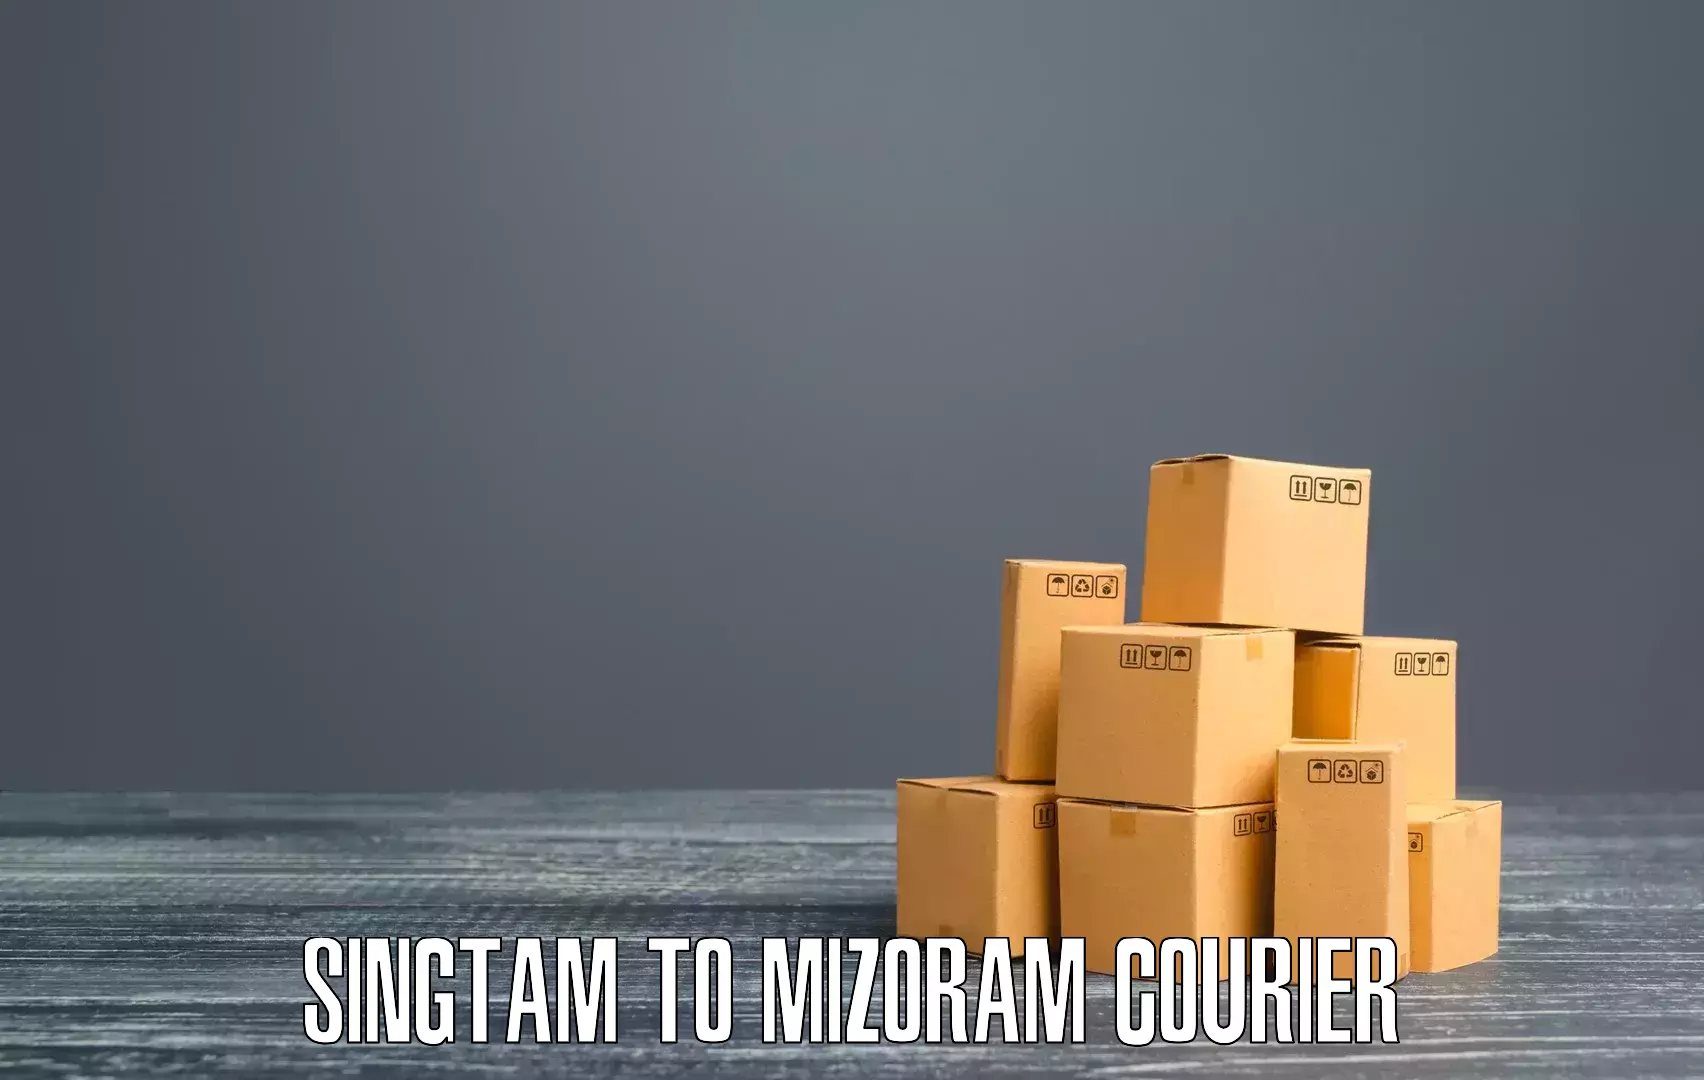 Customer-centric shipping Singtam to Aizawl